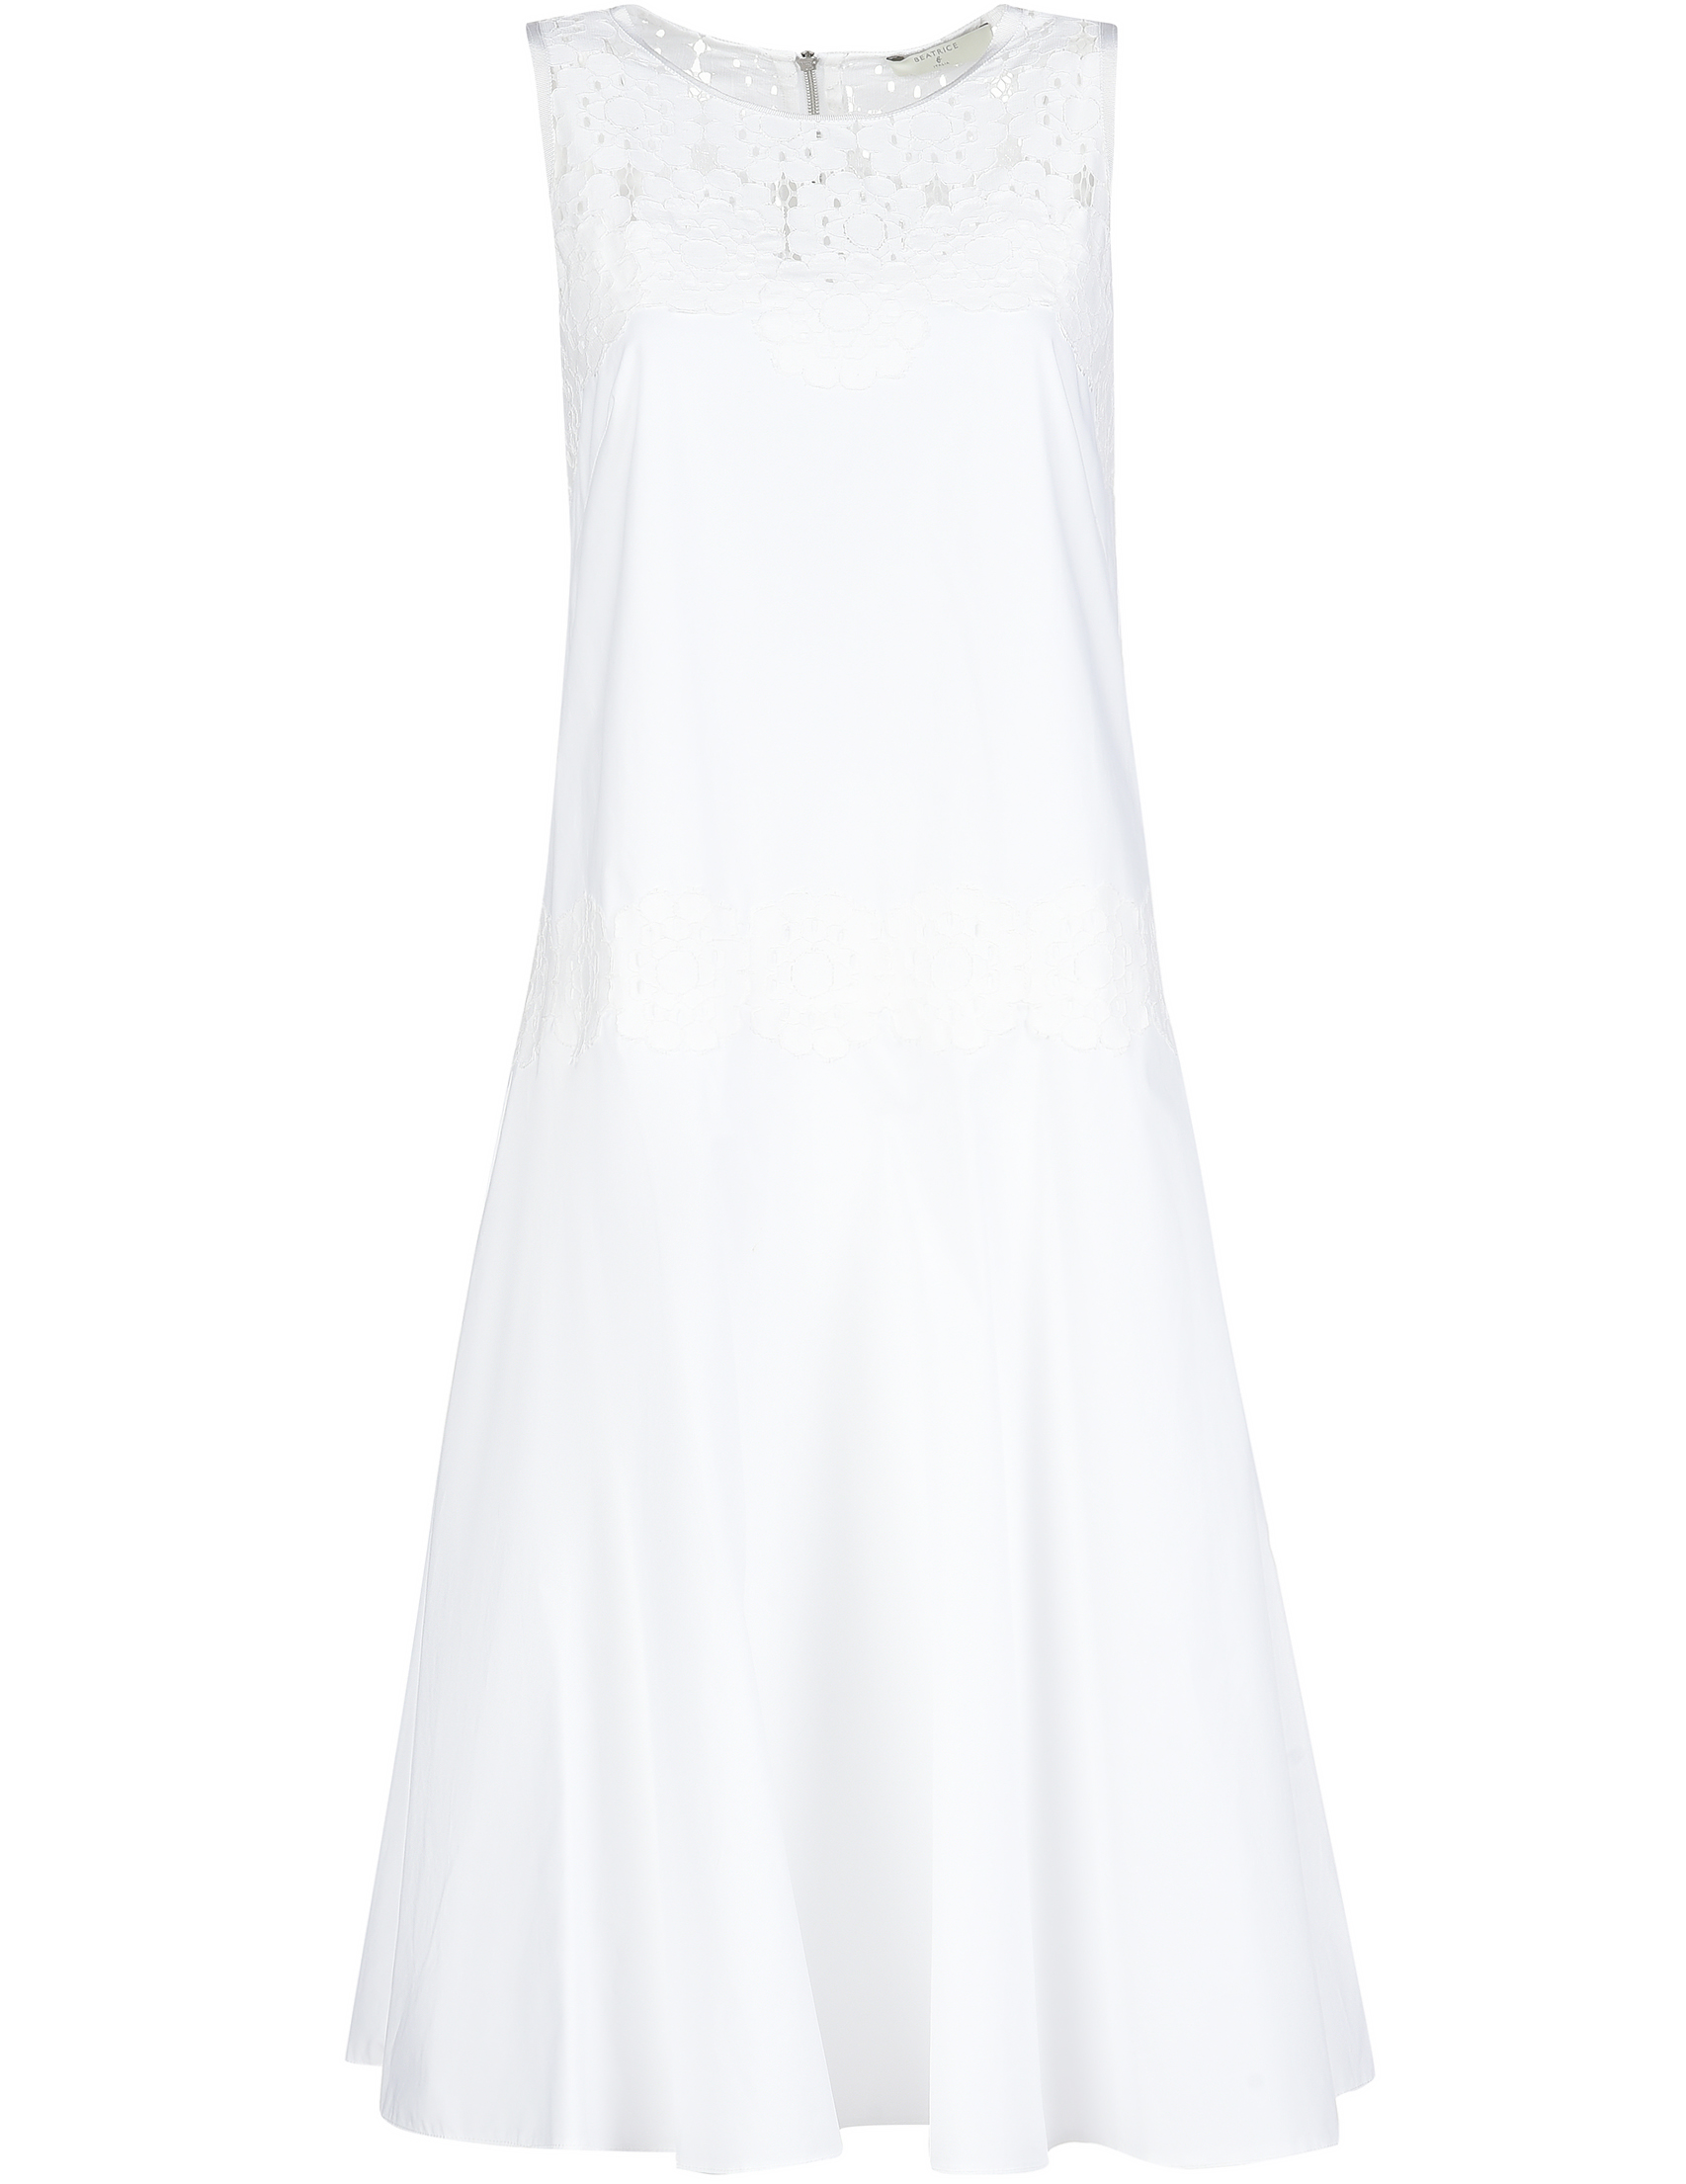 Женское платье BEATRICE.B 6786PARAH1_white